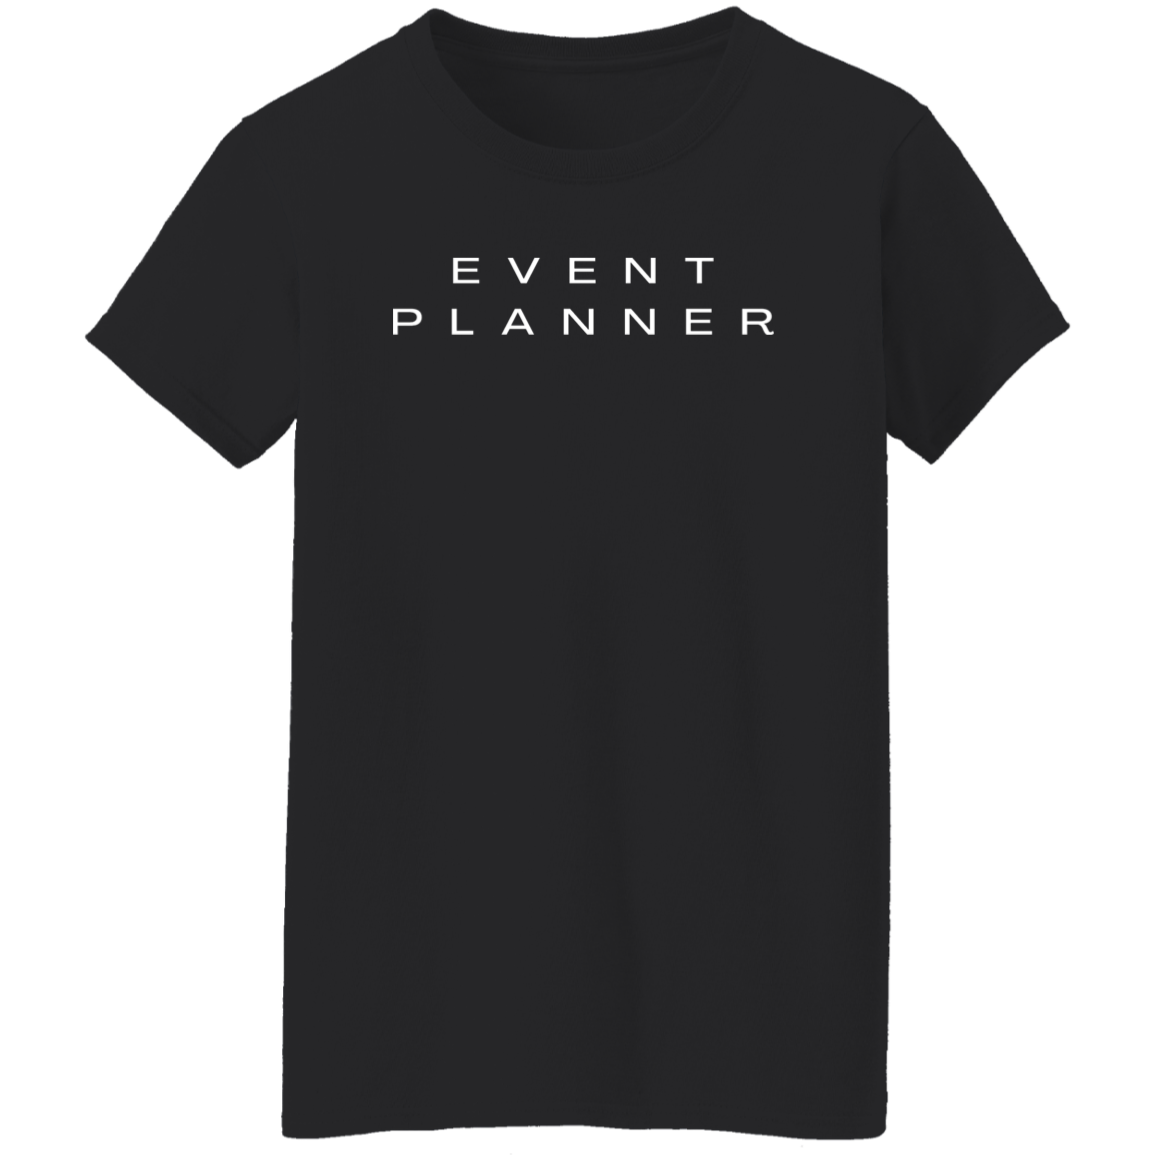 1029 - Camiseta de mujer, Planificador de bodas, Planificador de eventos